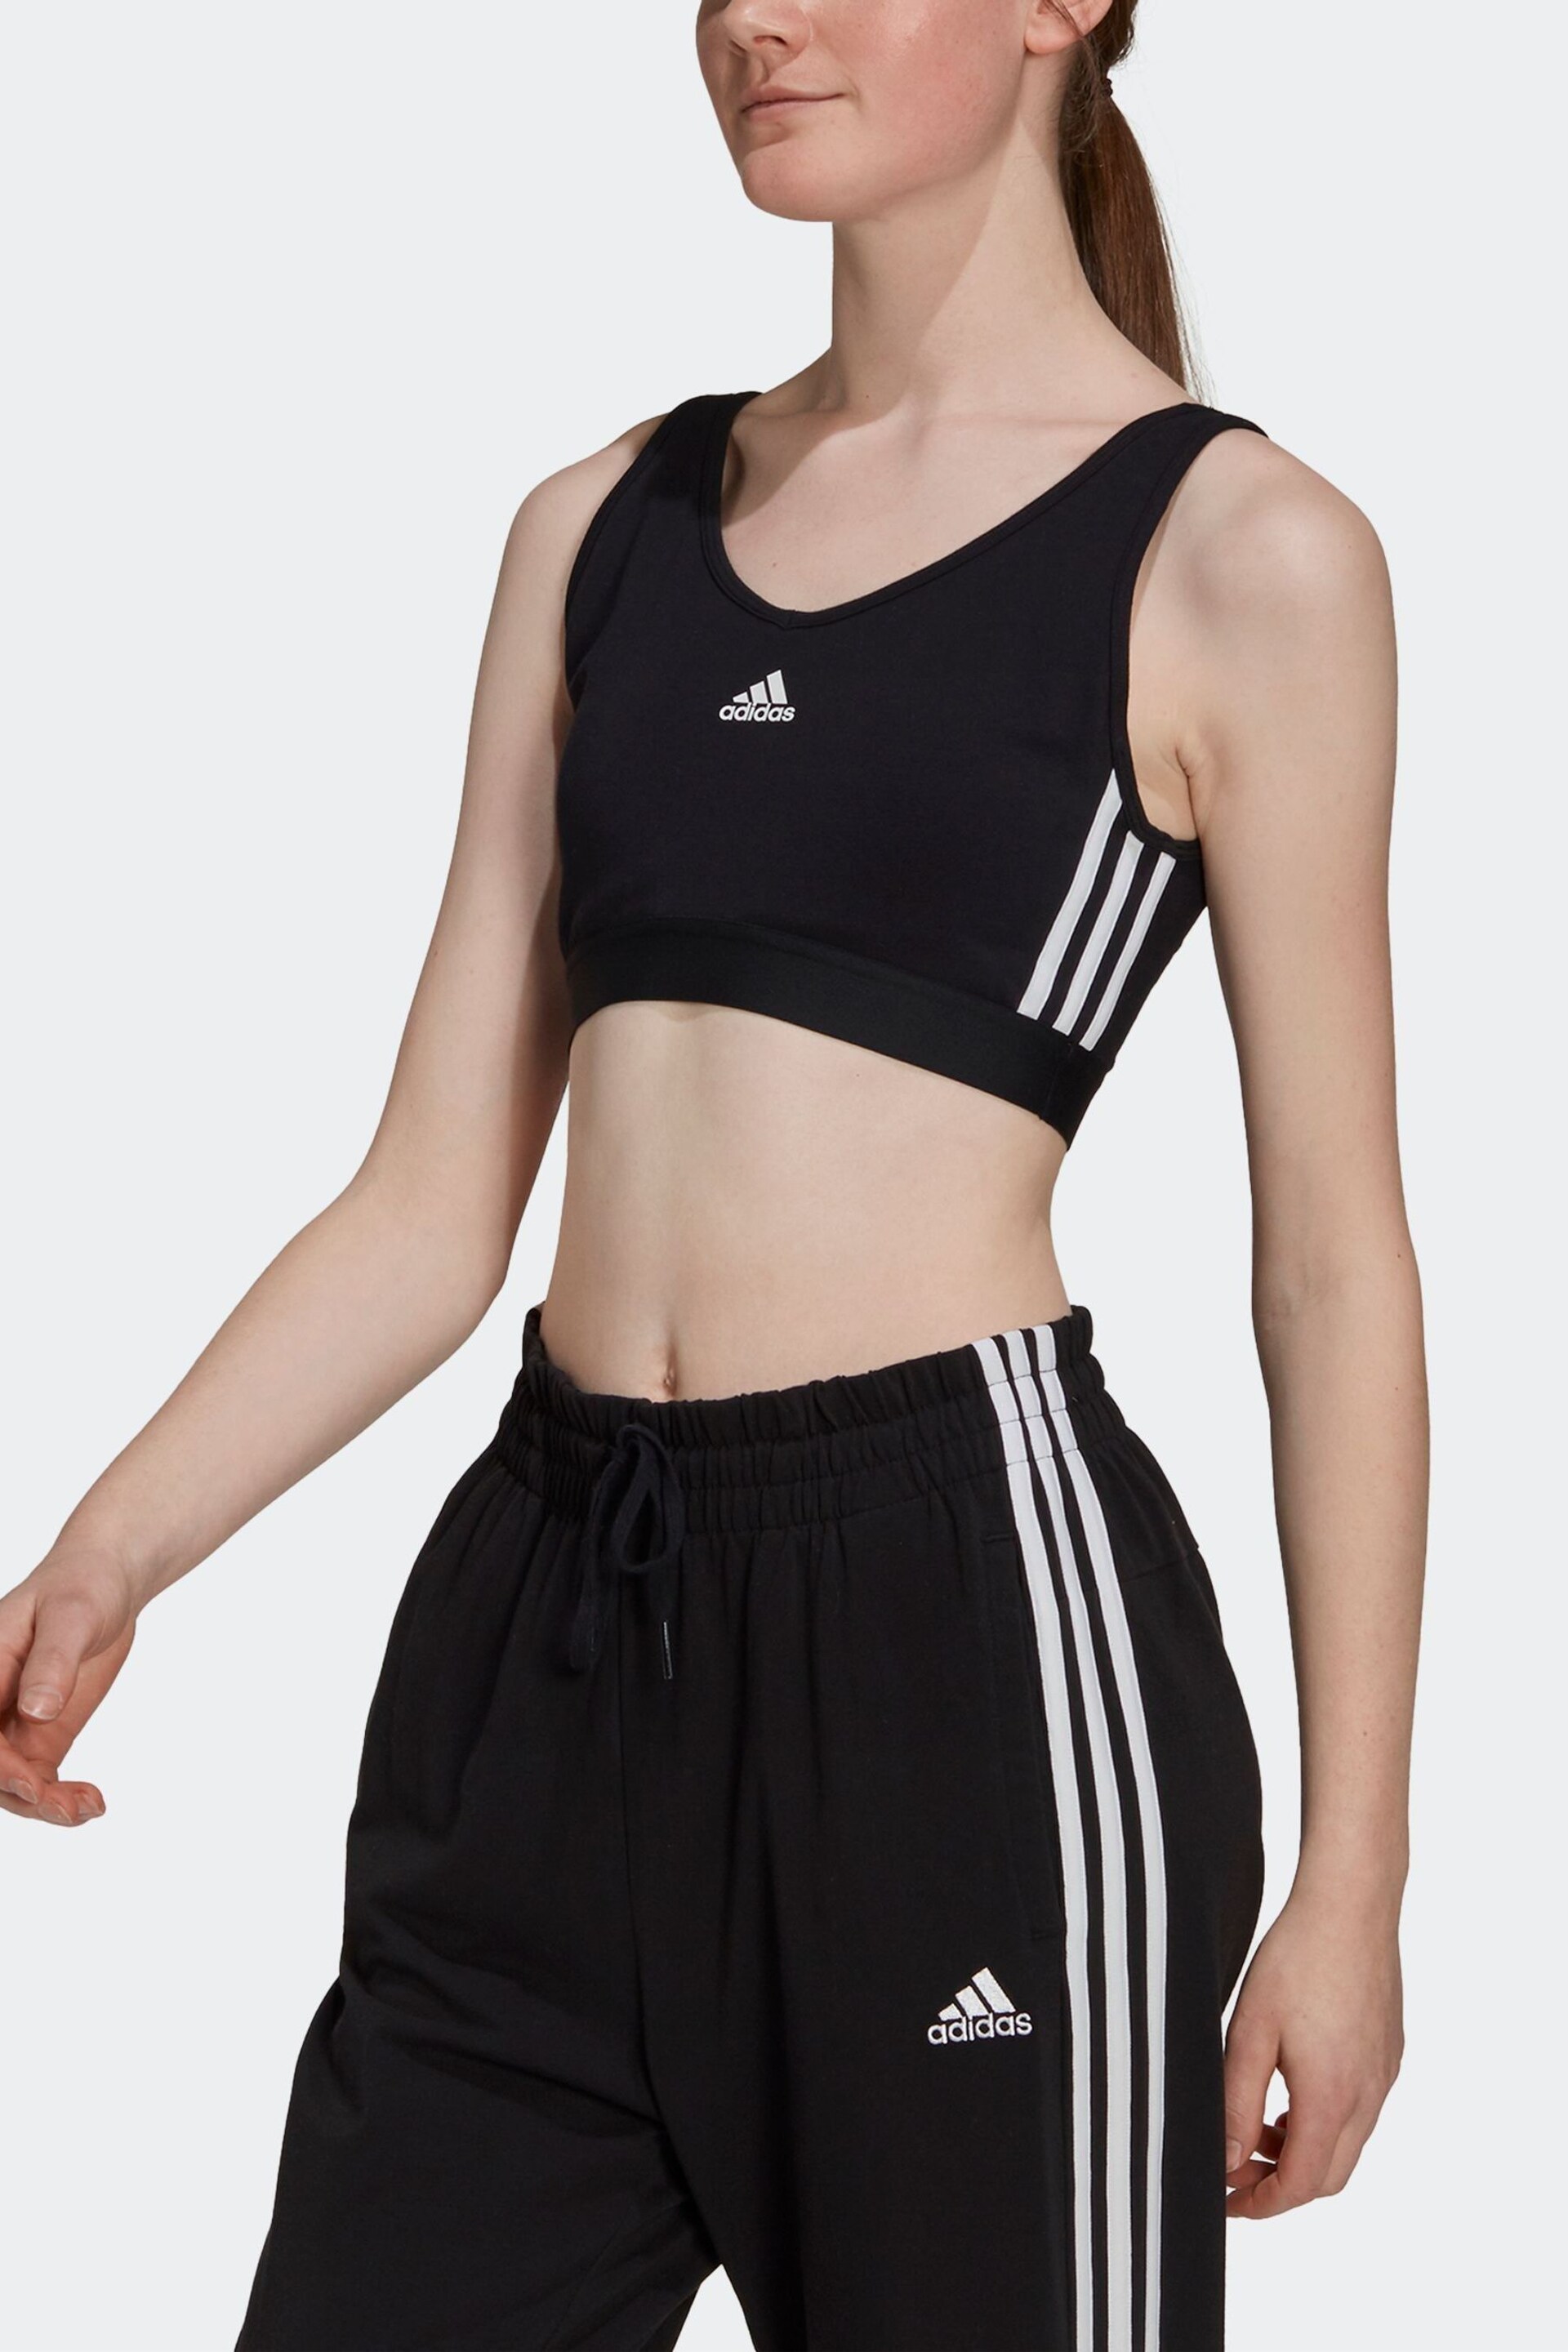 adidas Black/White Sportswear Essentials 3-Stripes Crop Top - Image 4 of 7